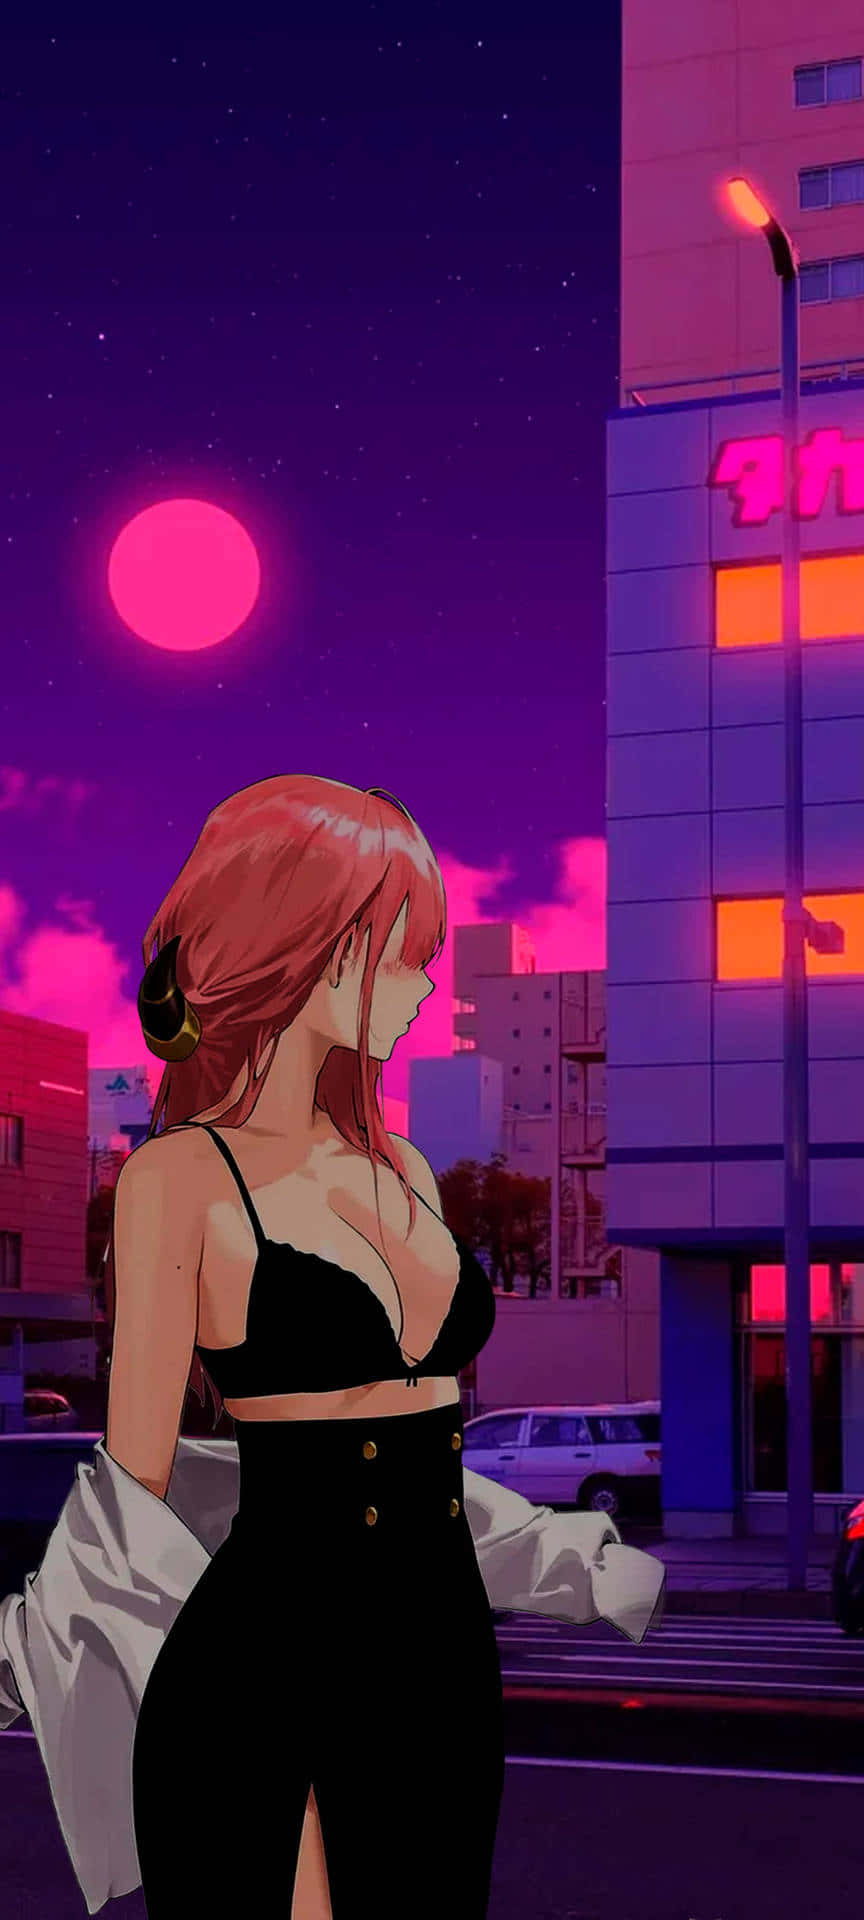 Magenta Sunset Cityscape Anime Style Wallpaper